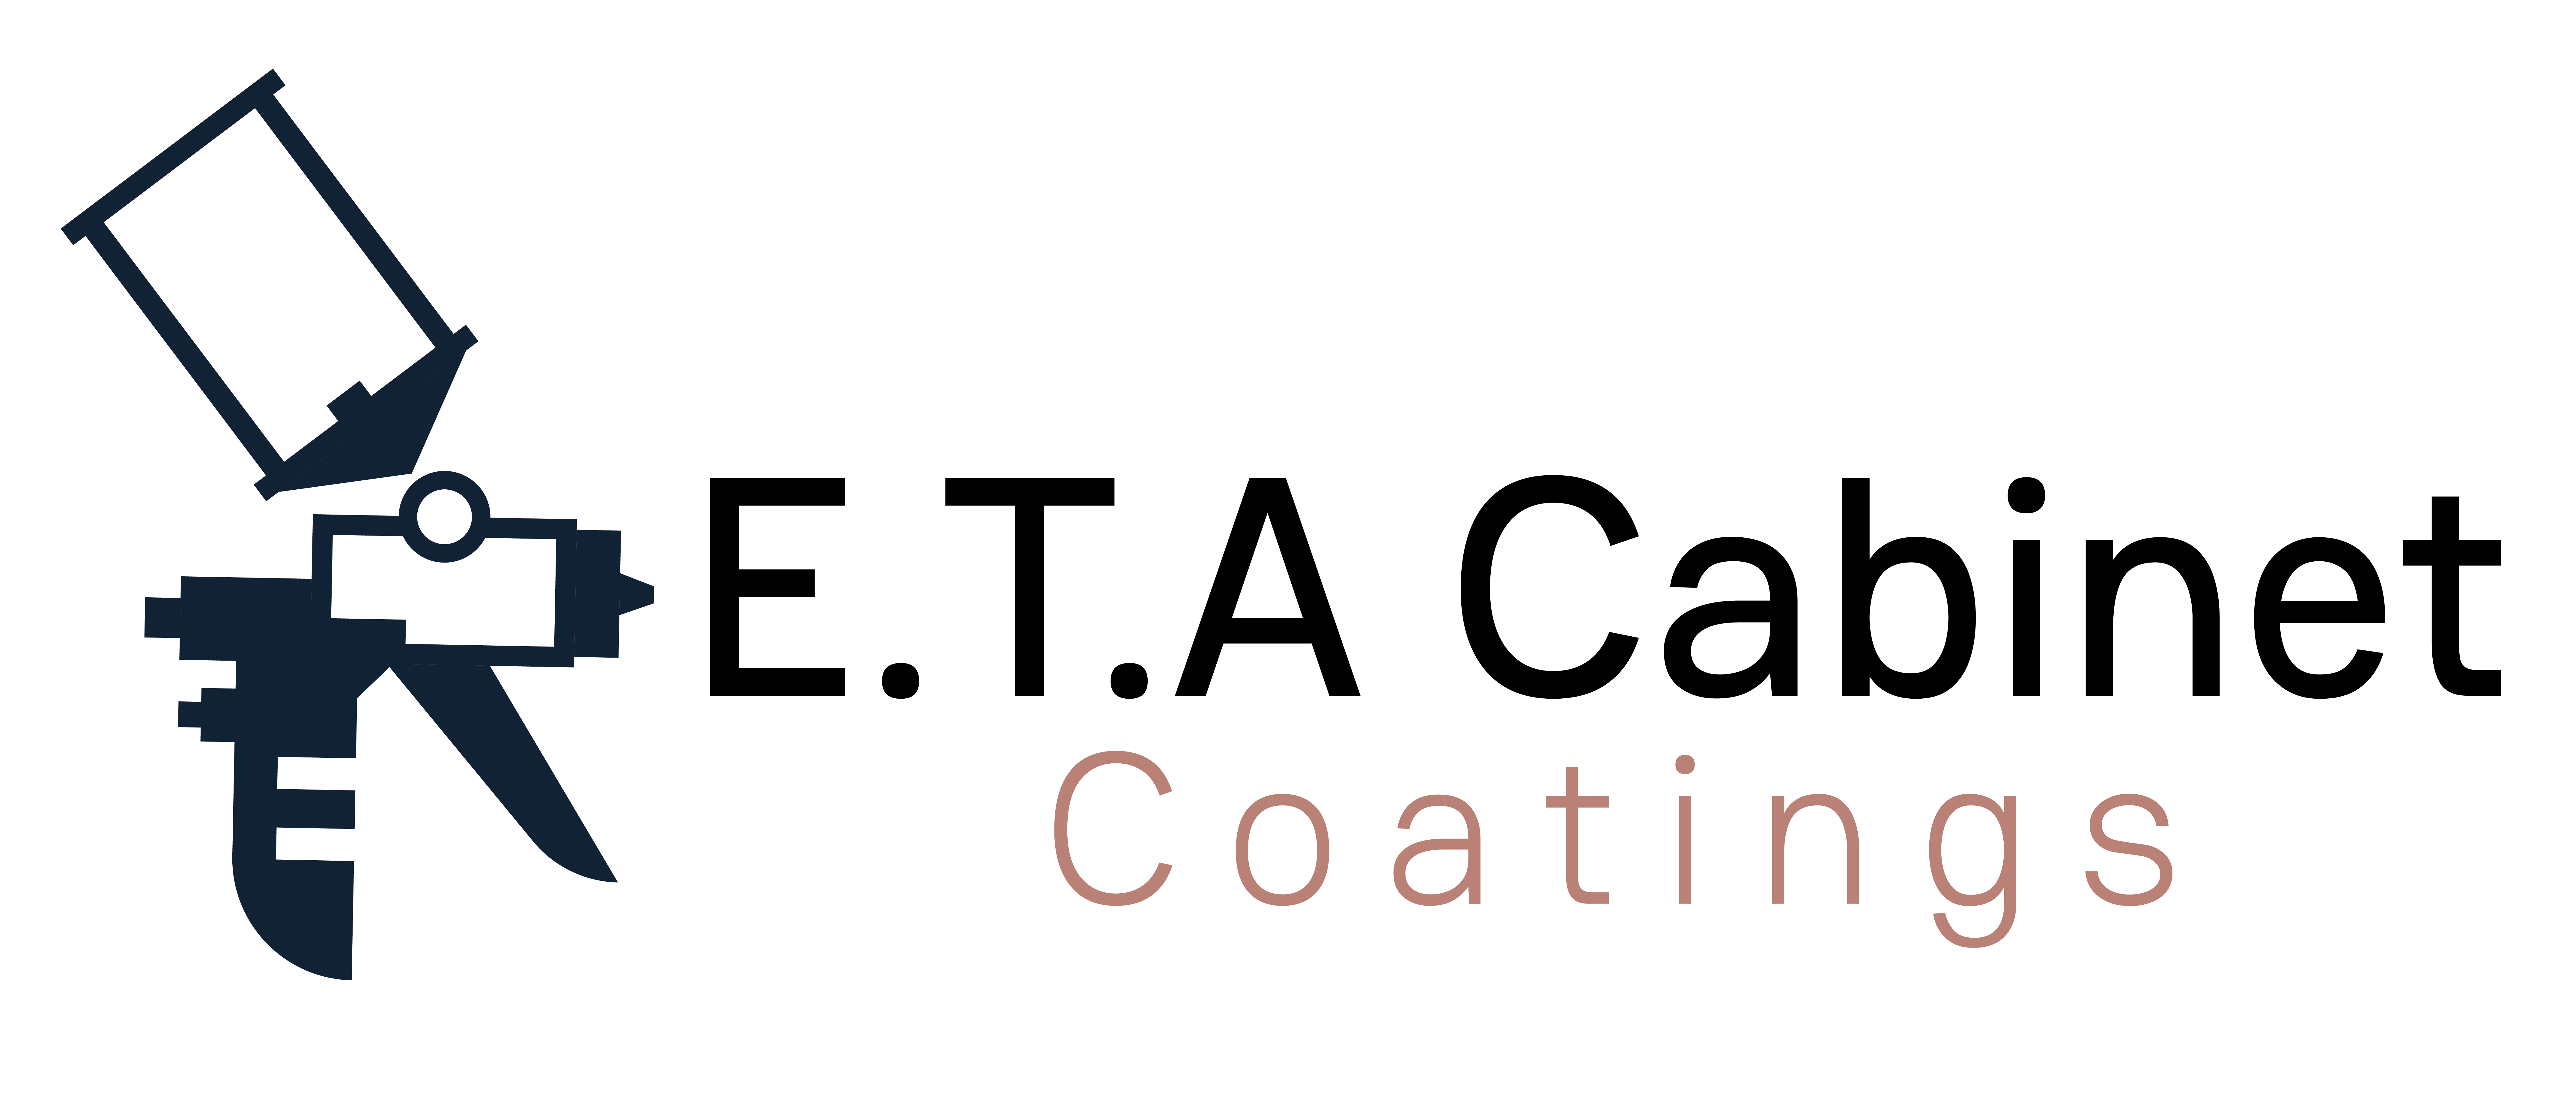 ETA Cabinet Coatings Logo